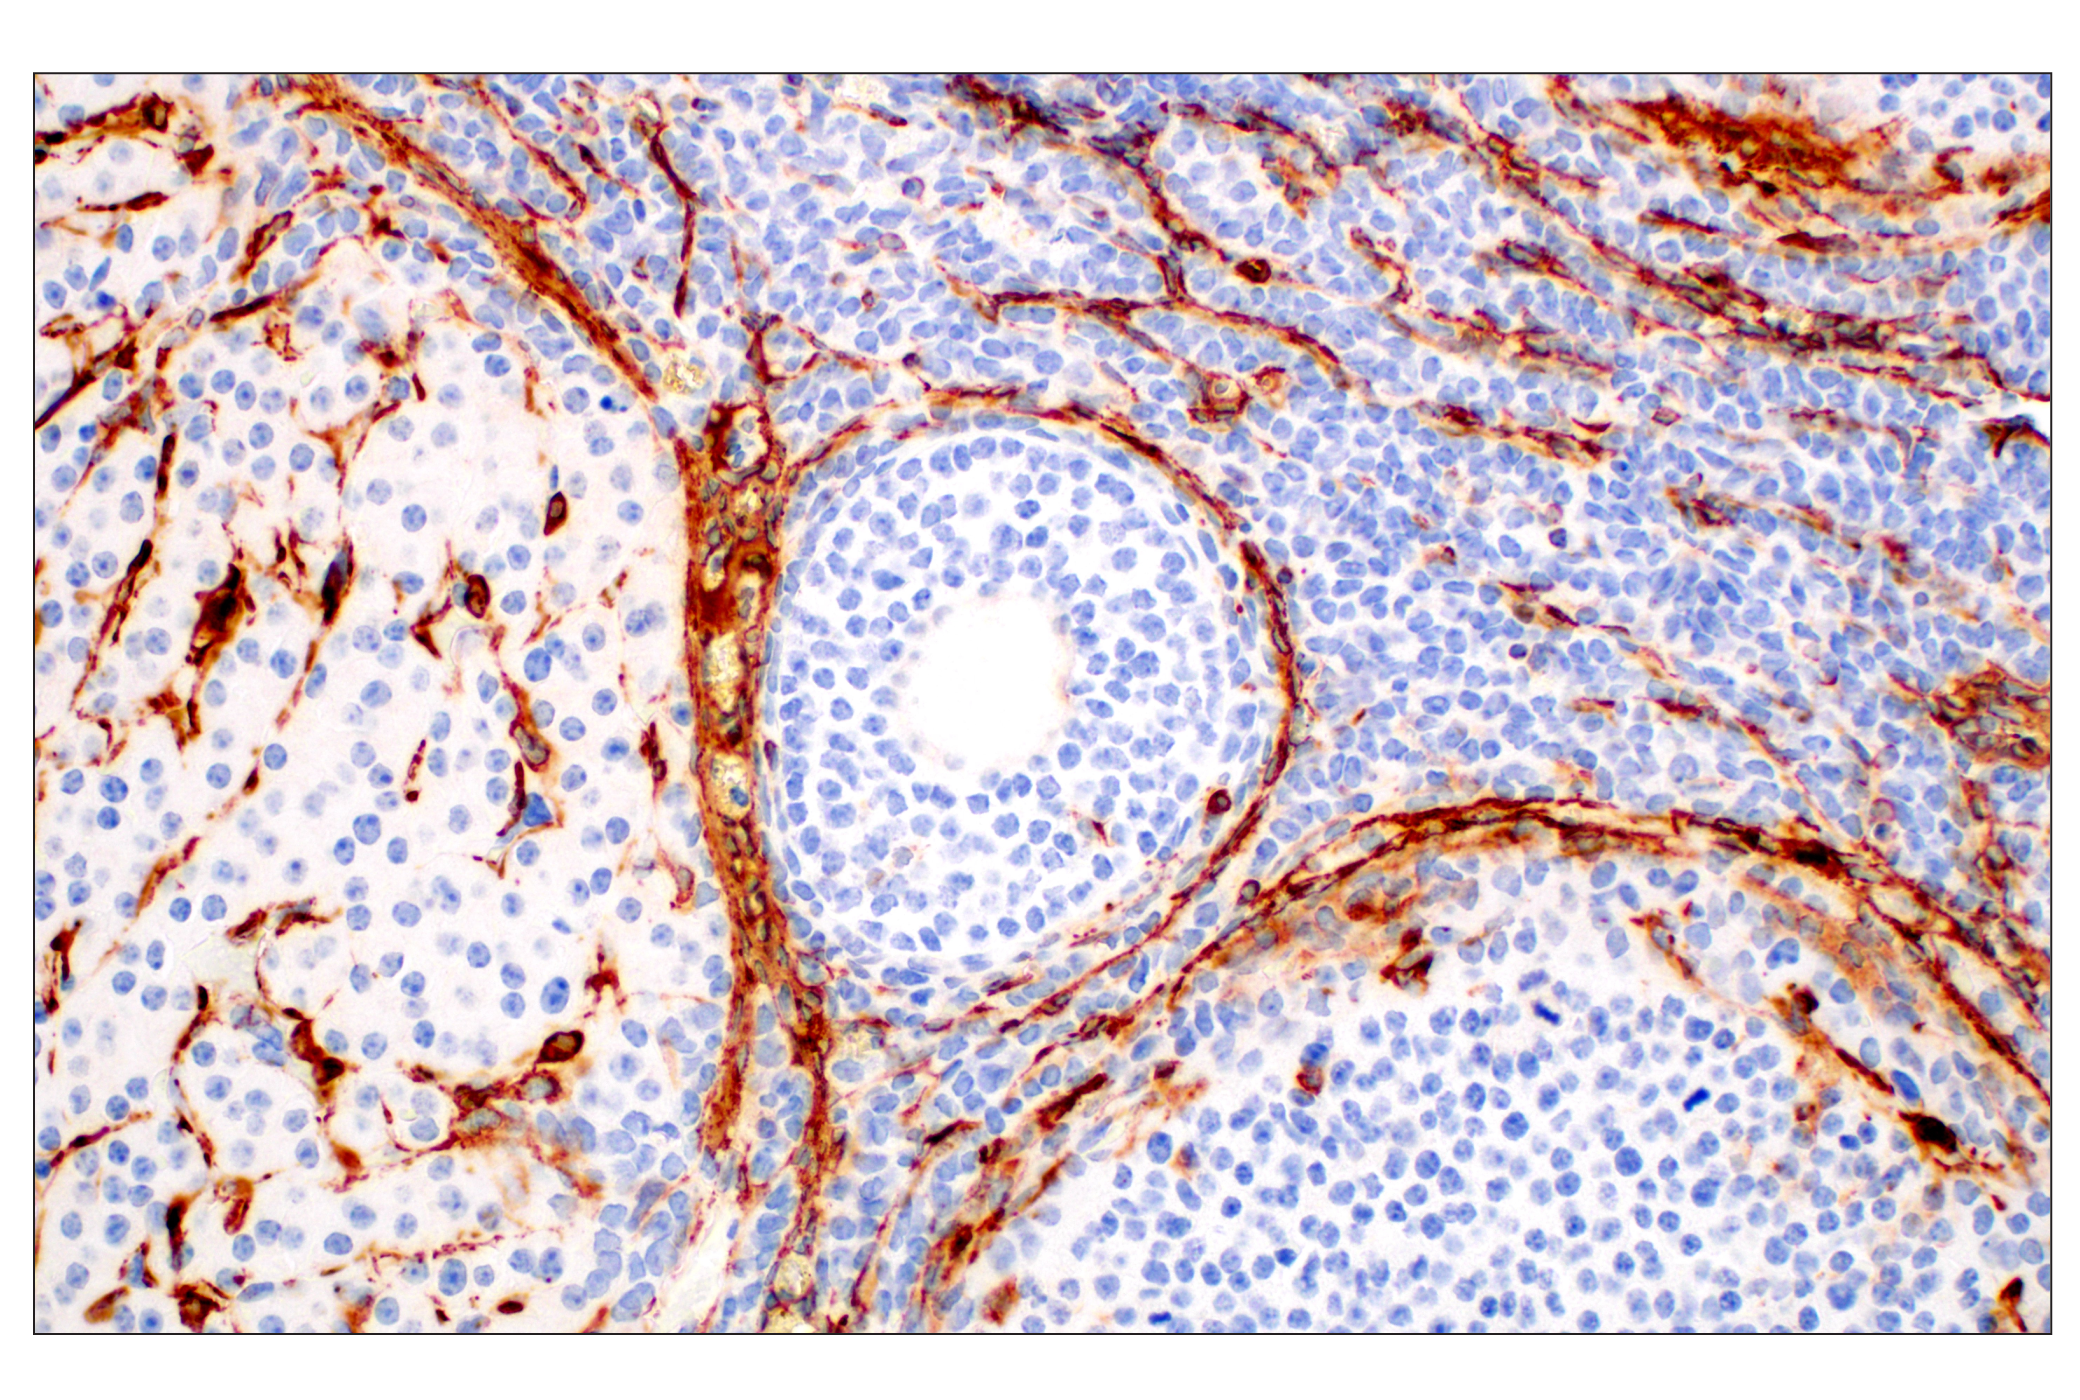  Image 58: Cancer Associated Fibroblast Marker Antibody Sampler Kit